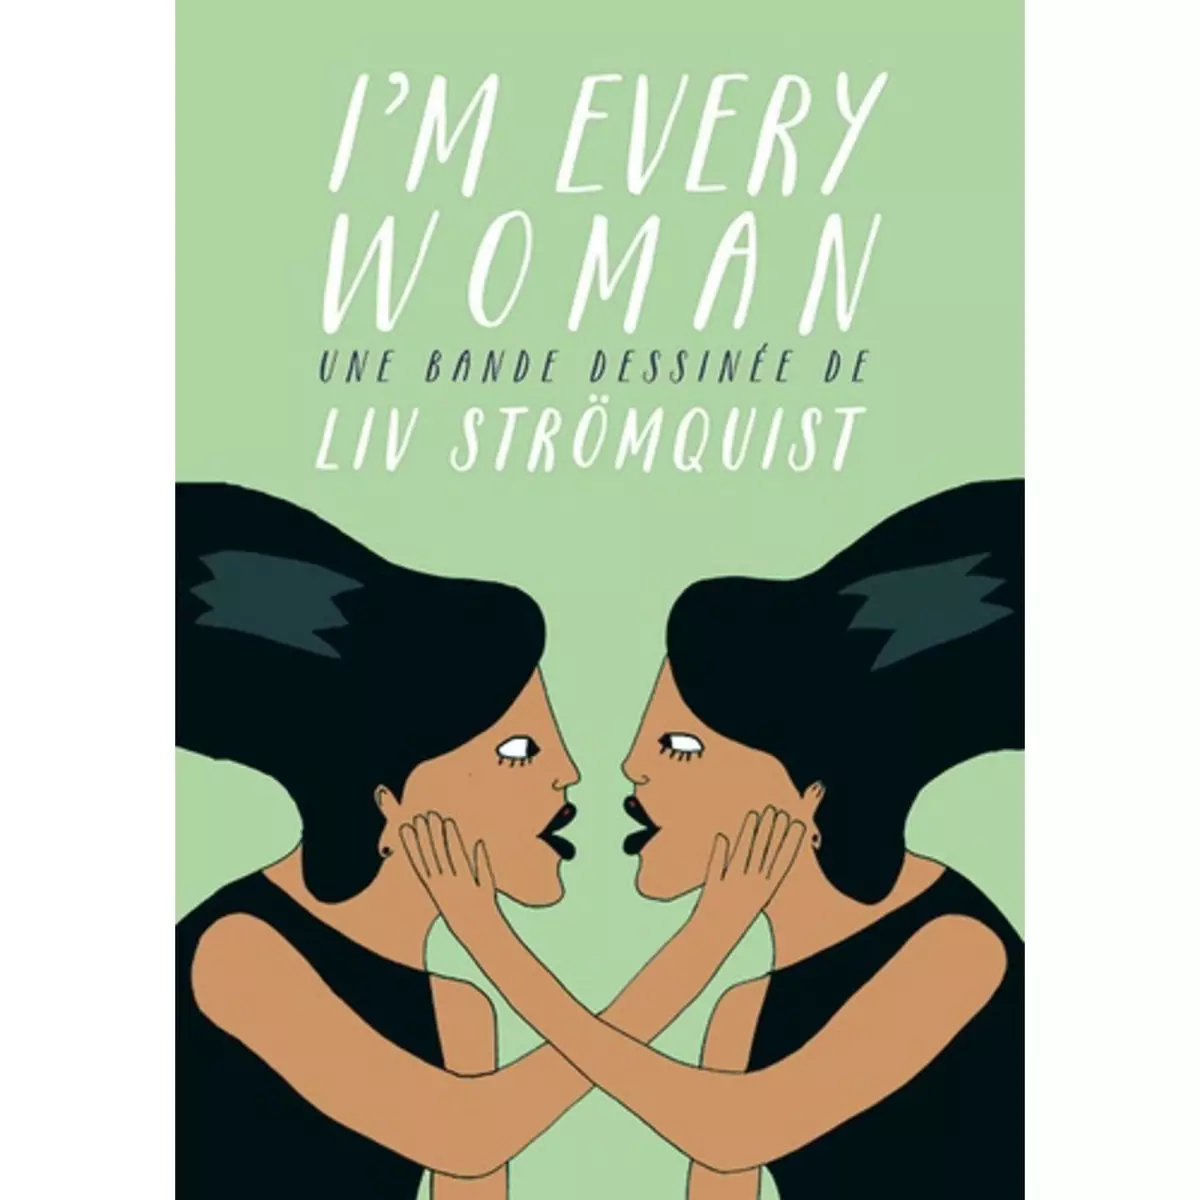  I'M EVERY WOMAN, Strömquist Liv